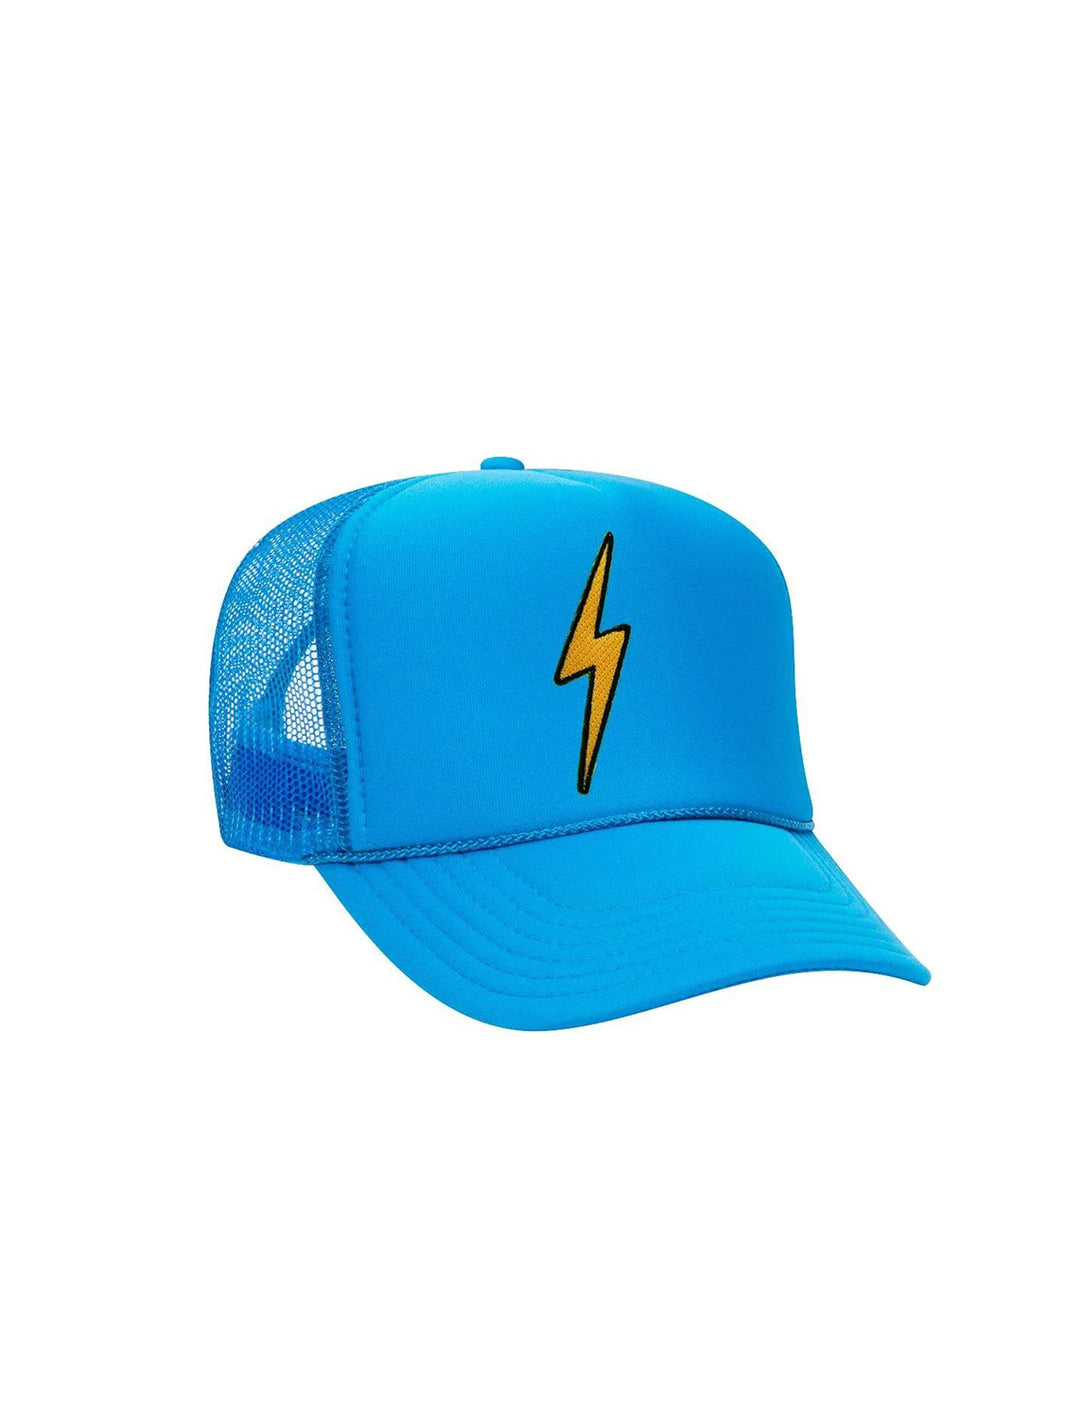 Aviator Nation's bolt vintage low rise trucker hat in neon blue.